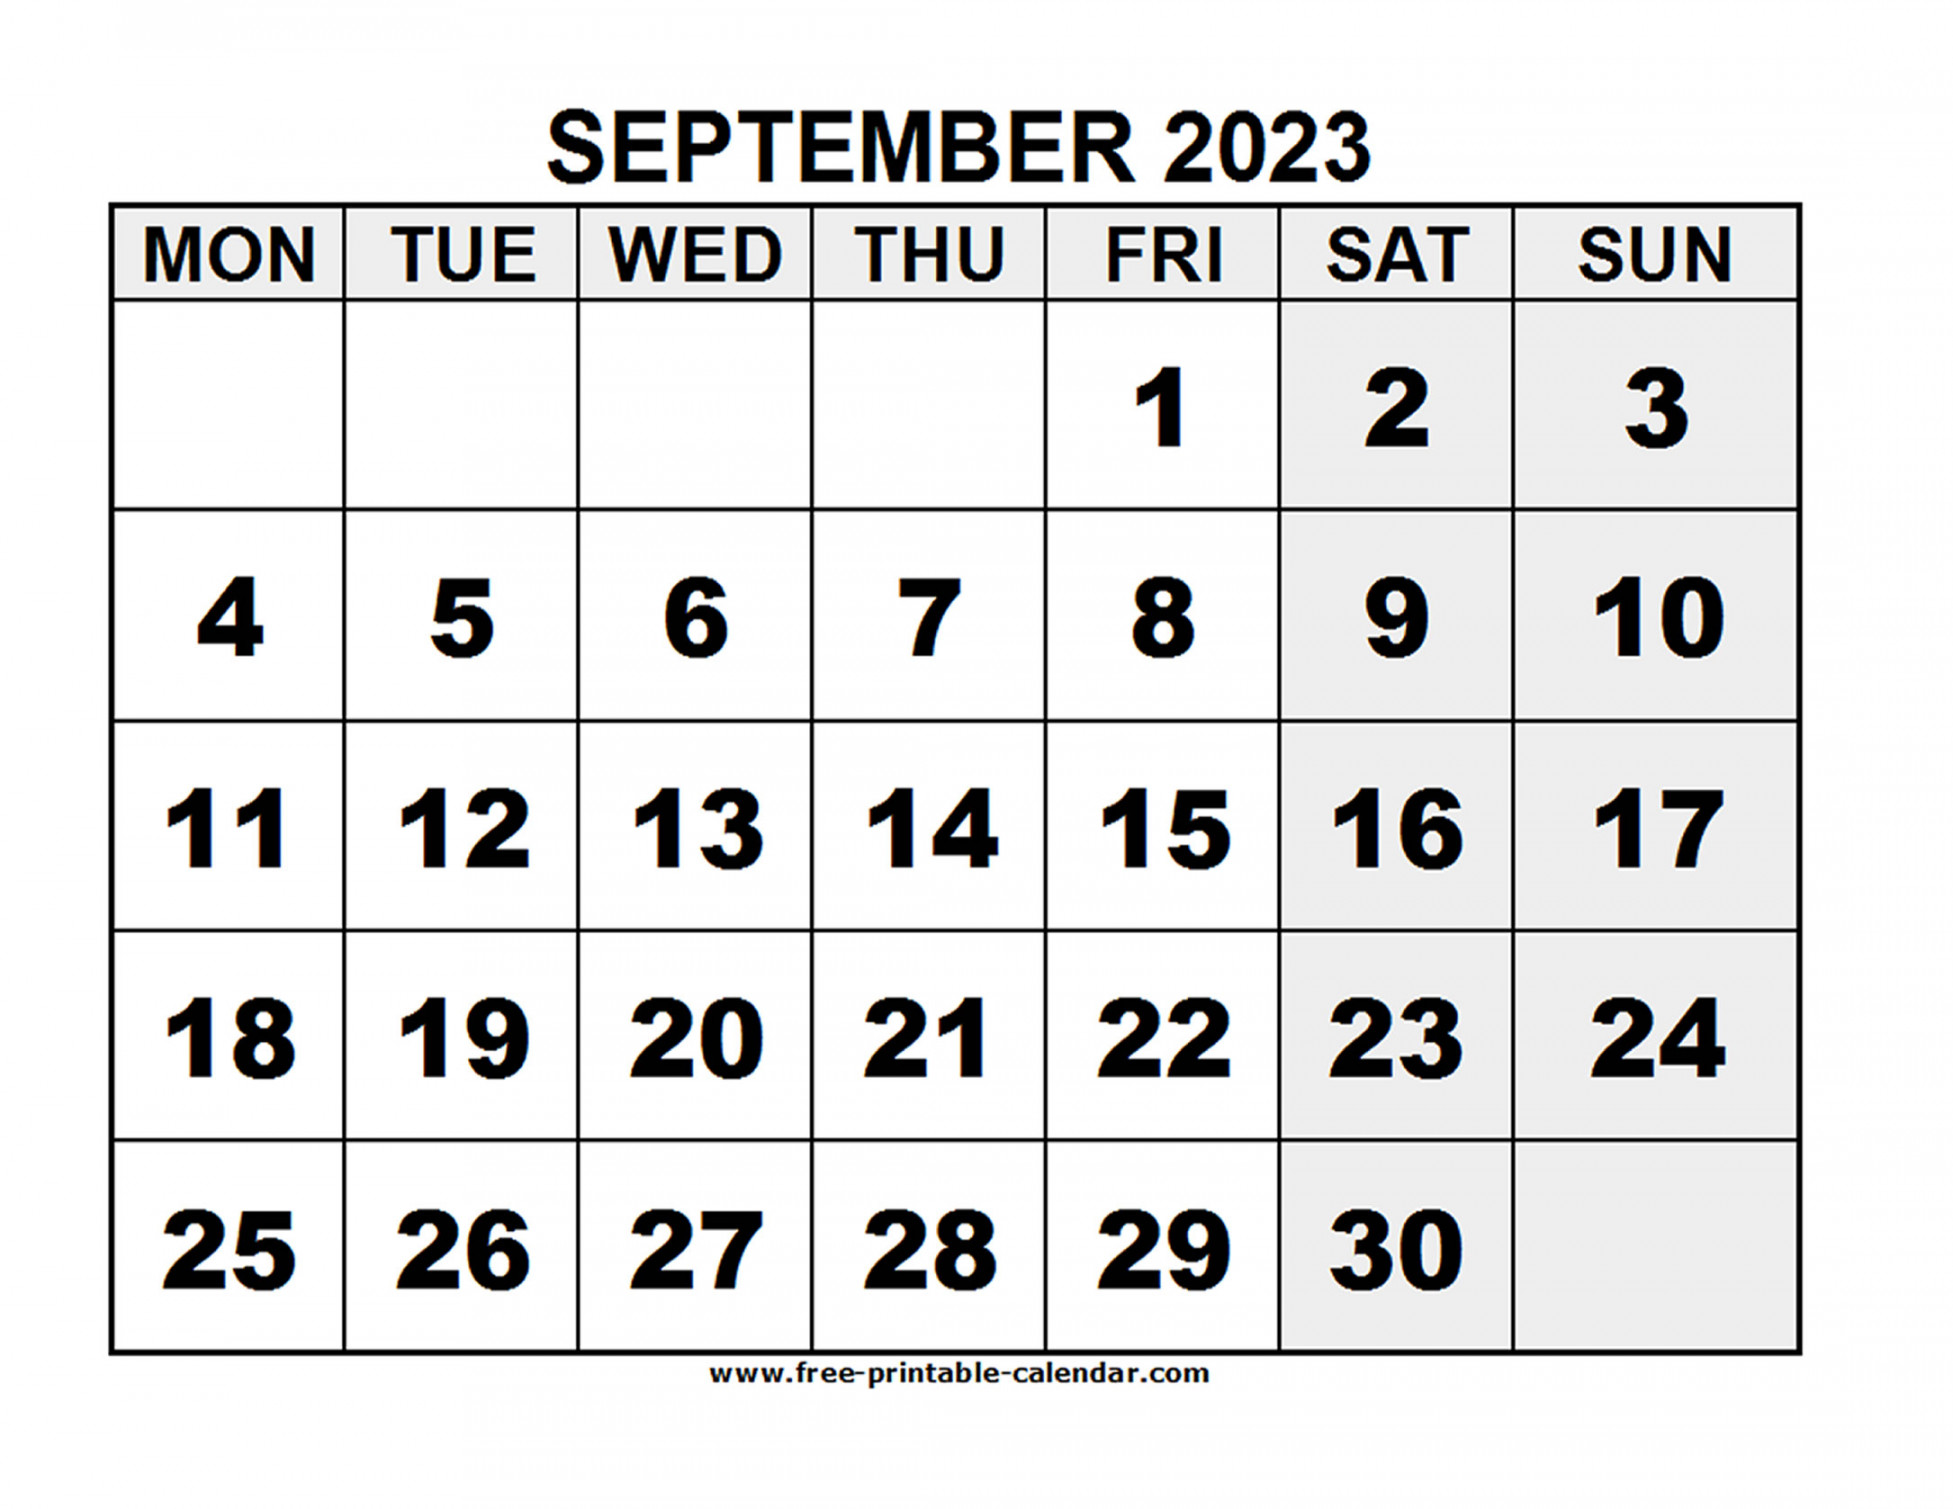 September - Free-printable-calendar